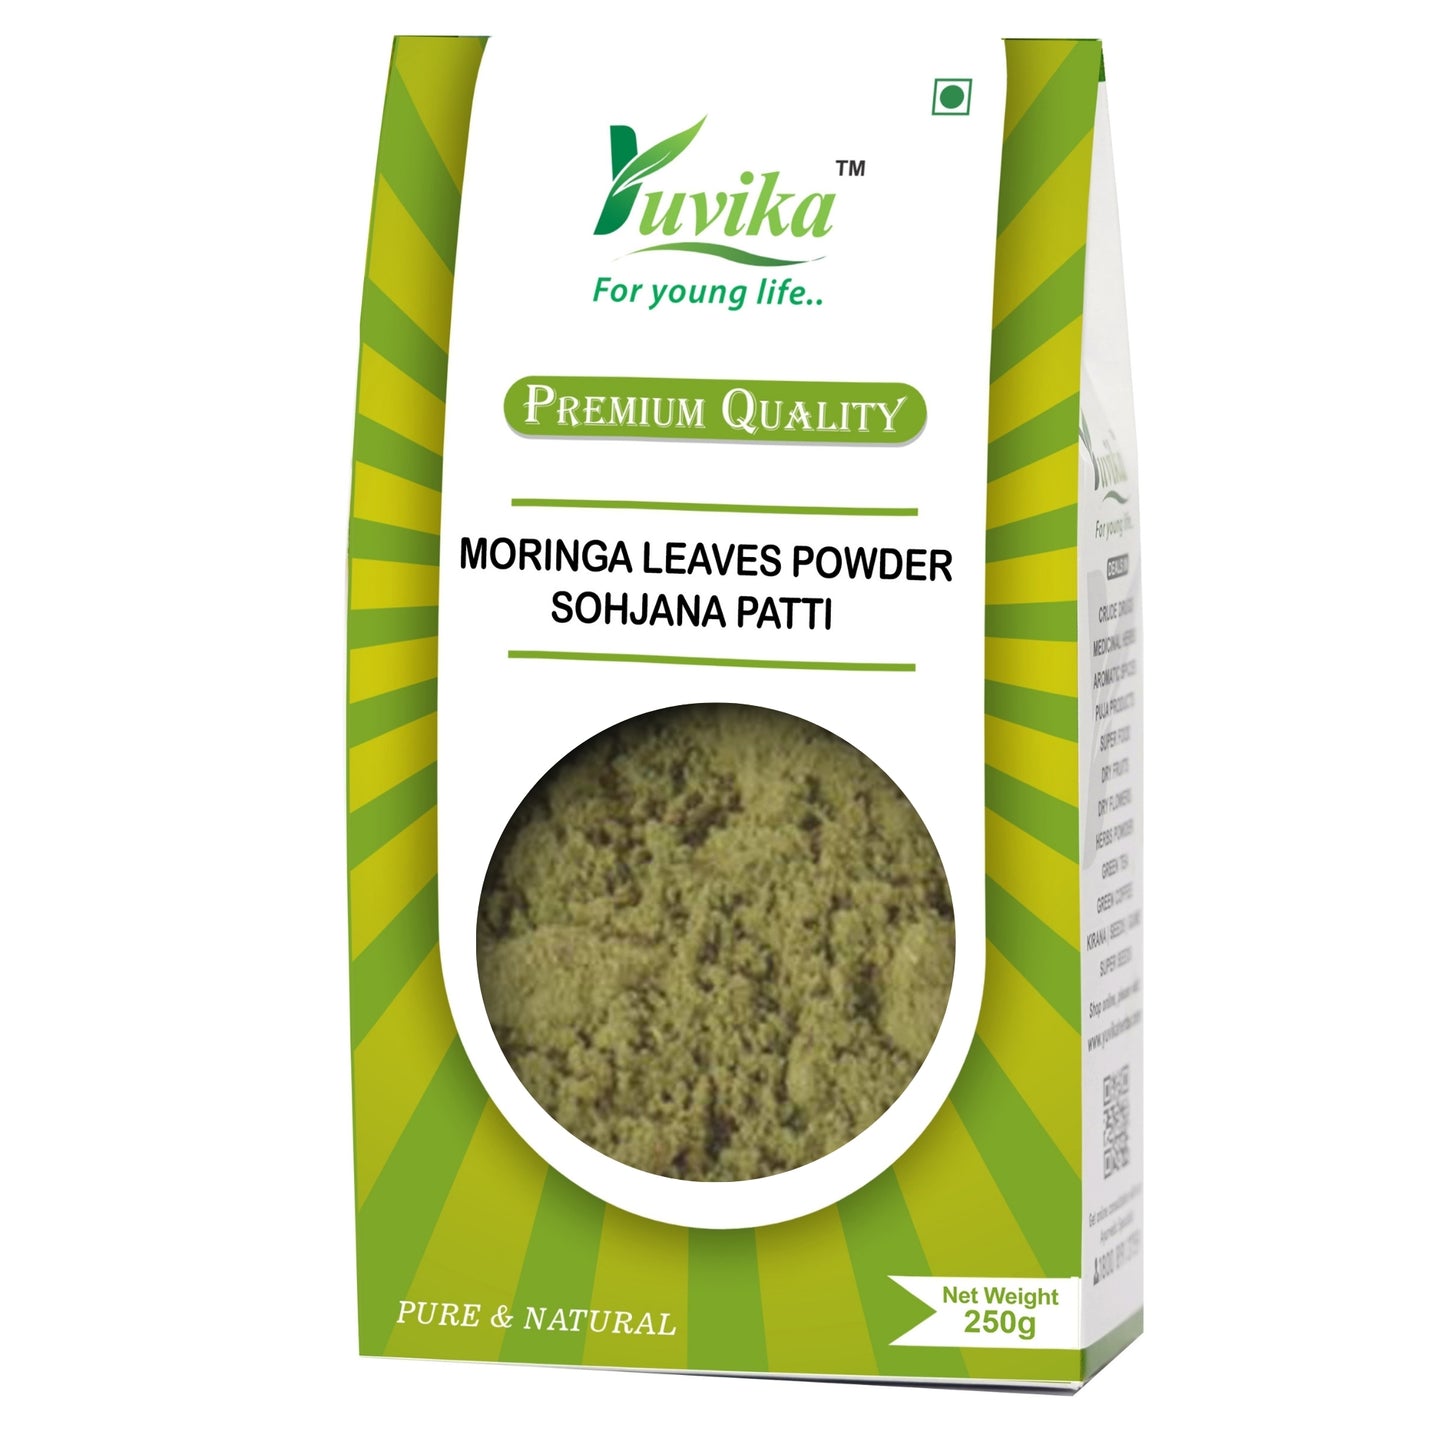 Moringa Powder - Moringa oleifera - Sohjana Patti Powder (250g)